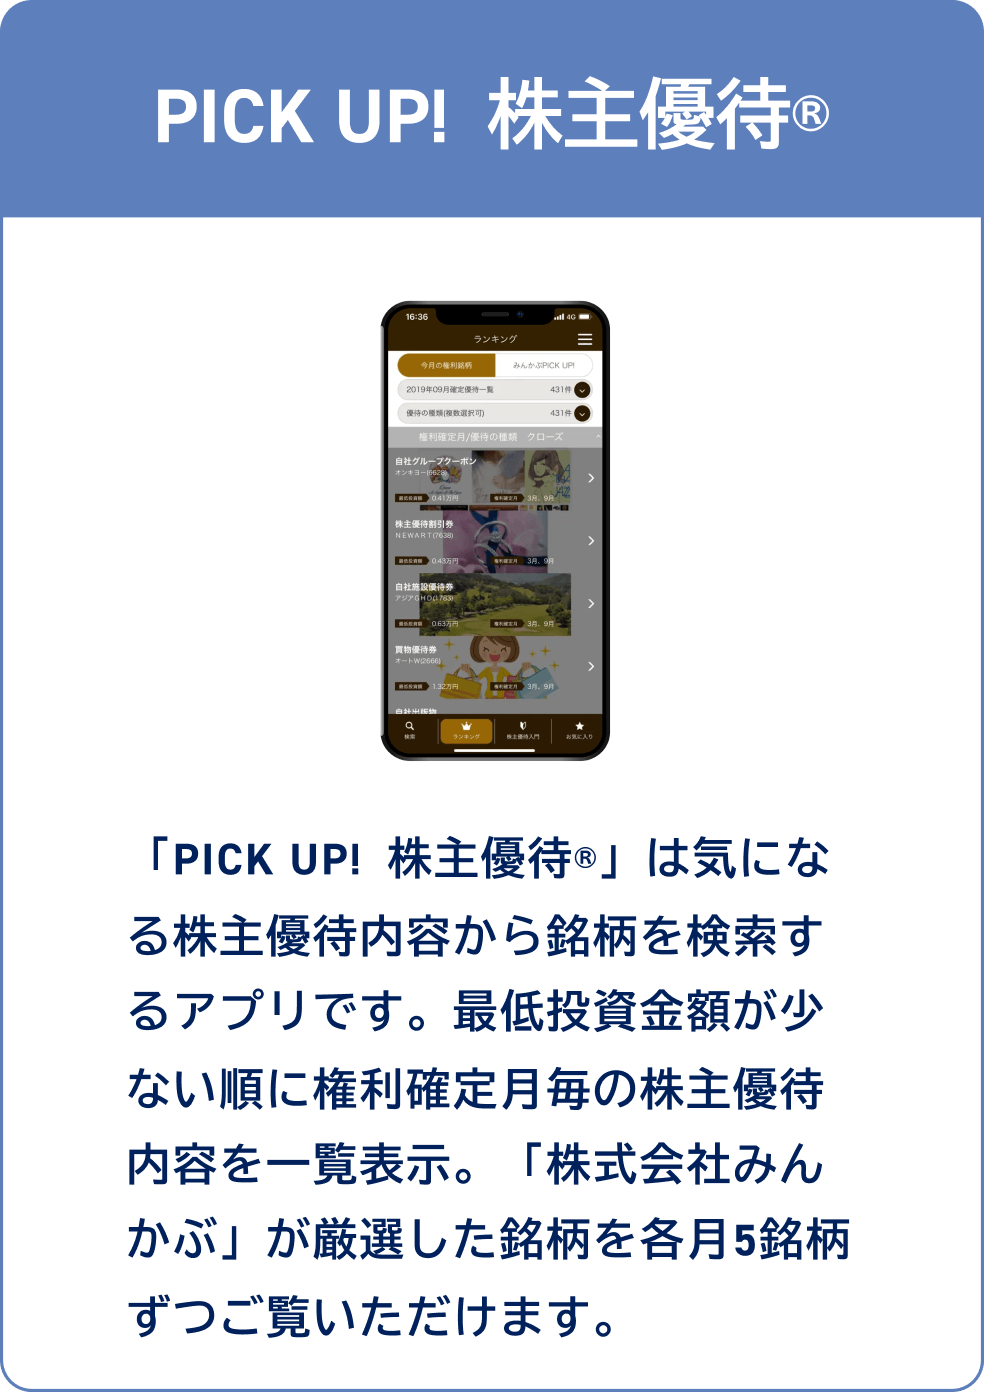 PICK UP! 株主優待®